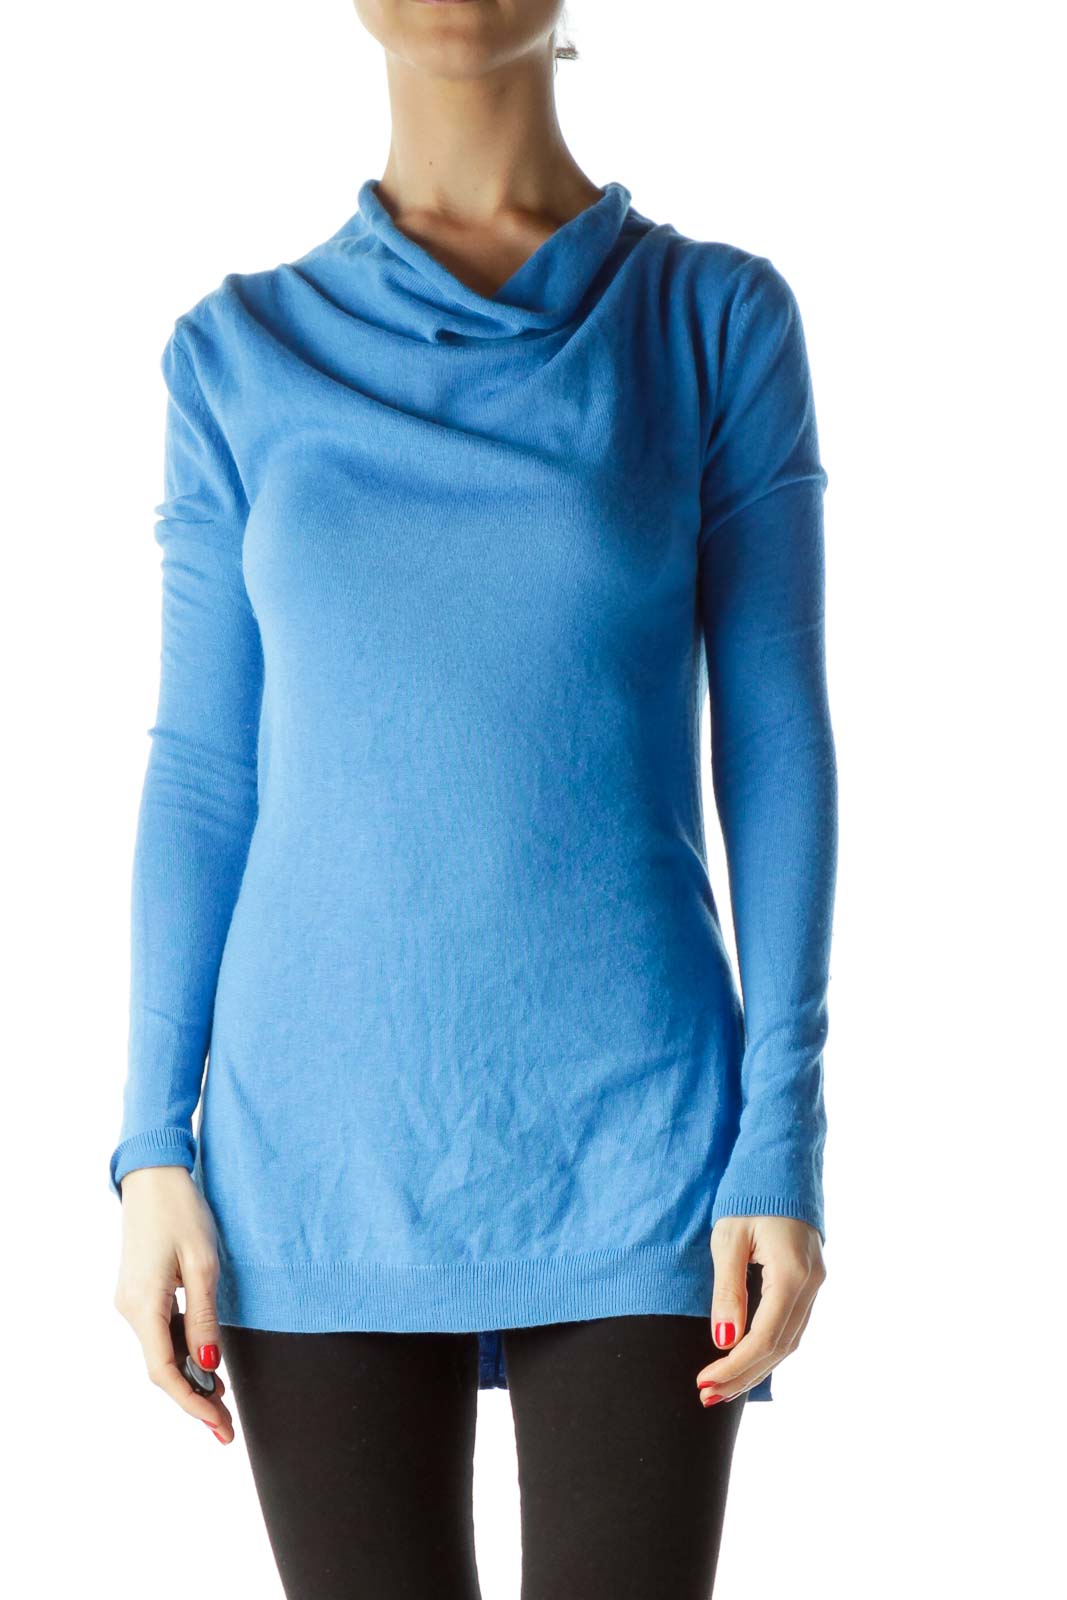 Blue Cowl Neck Angora Sweater Front